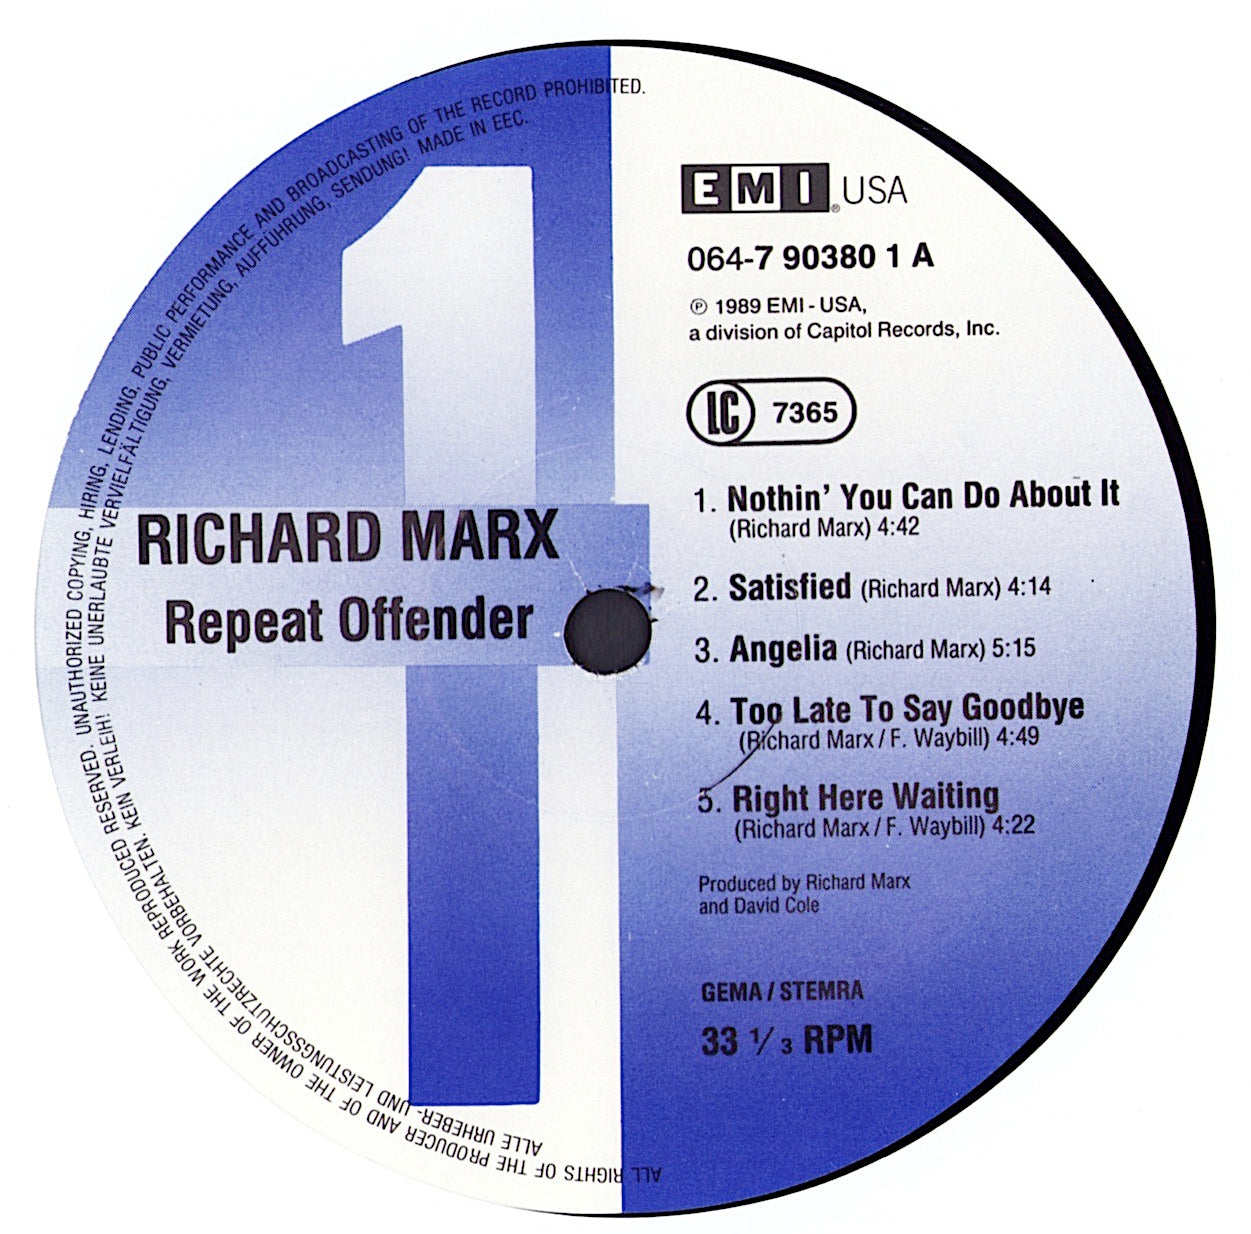 Richard Marx – Repeat Offender Vinyl LP